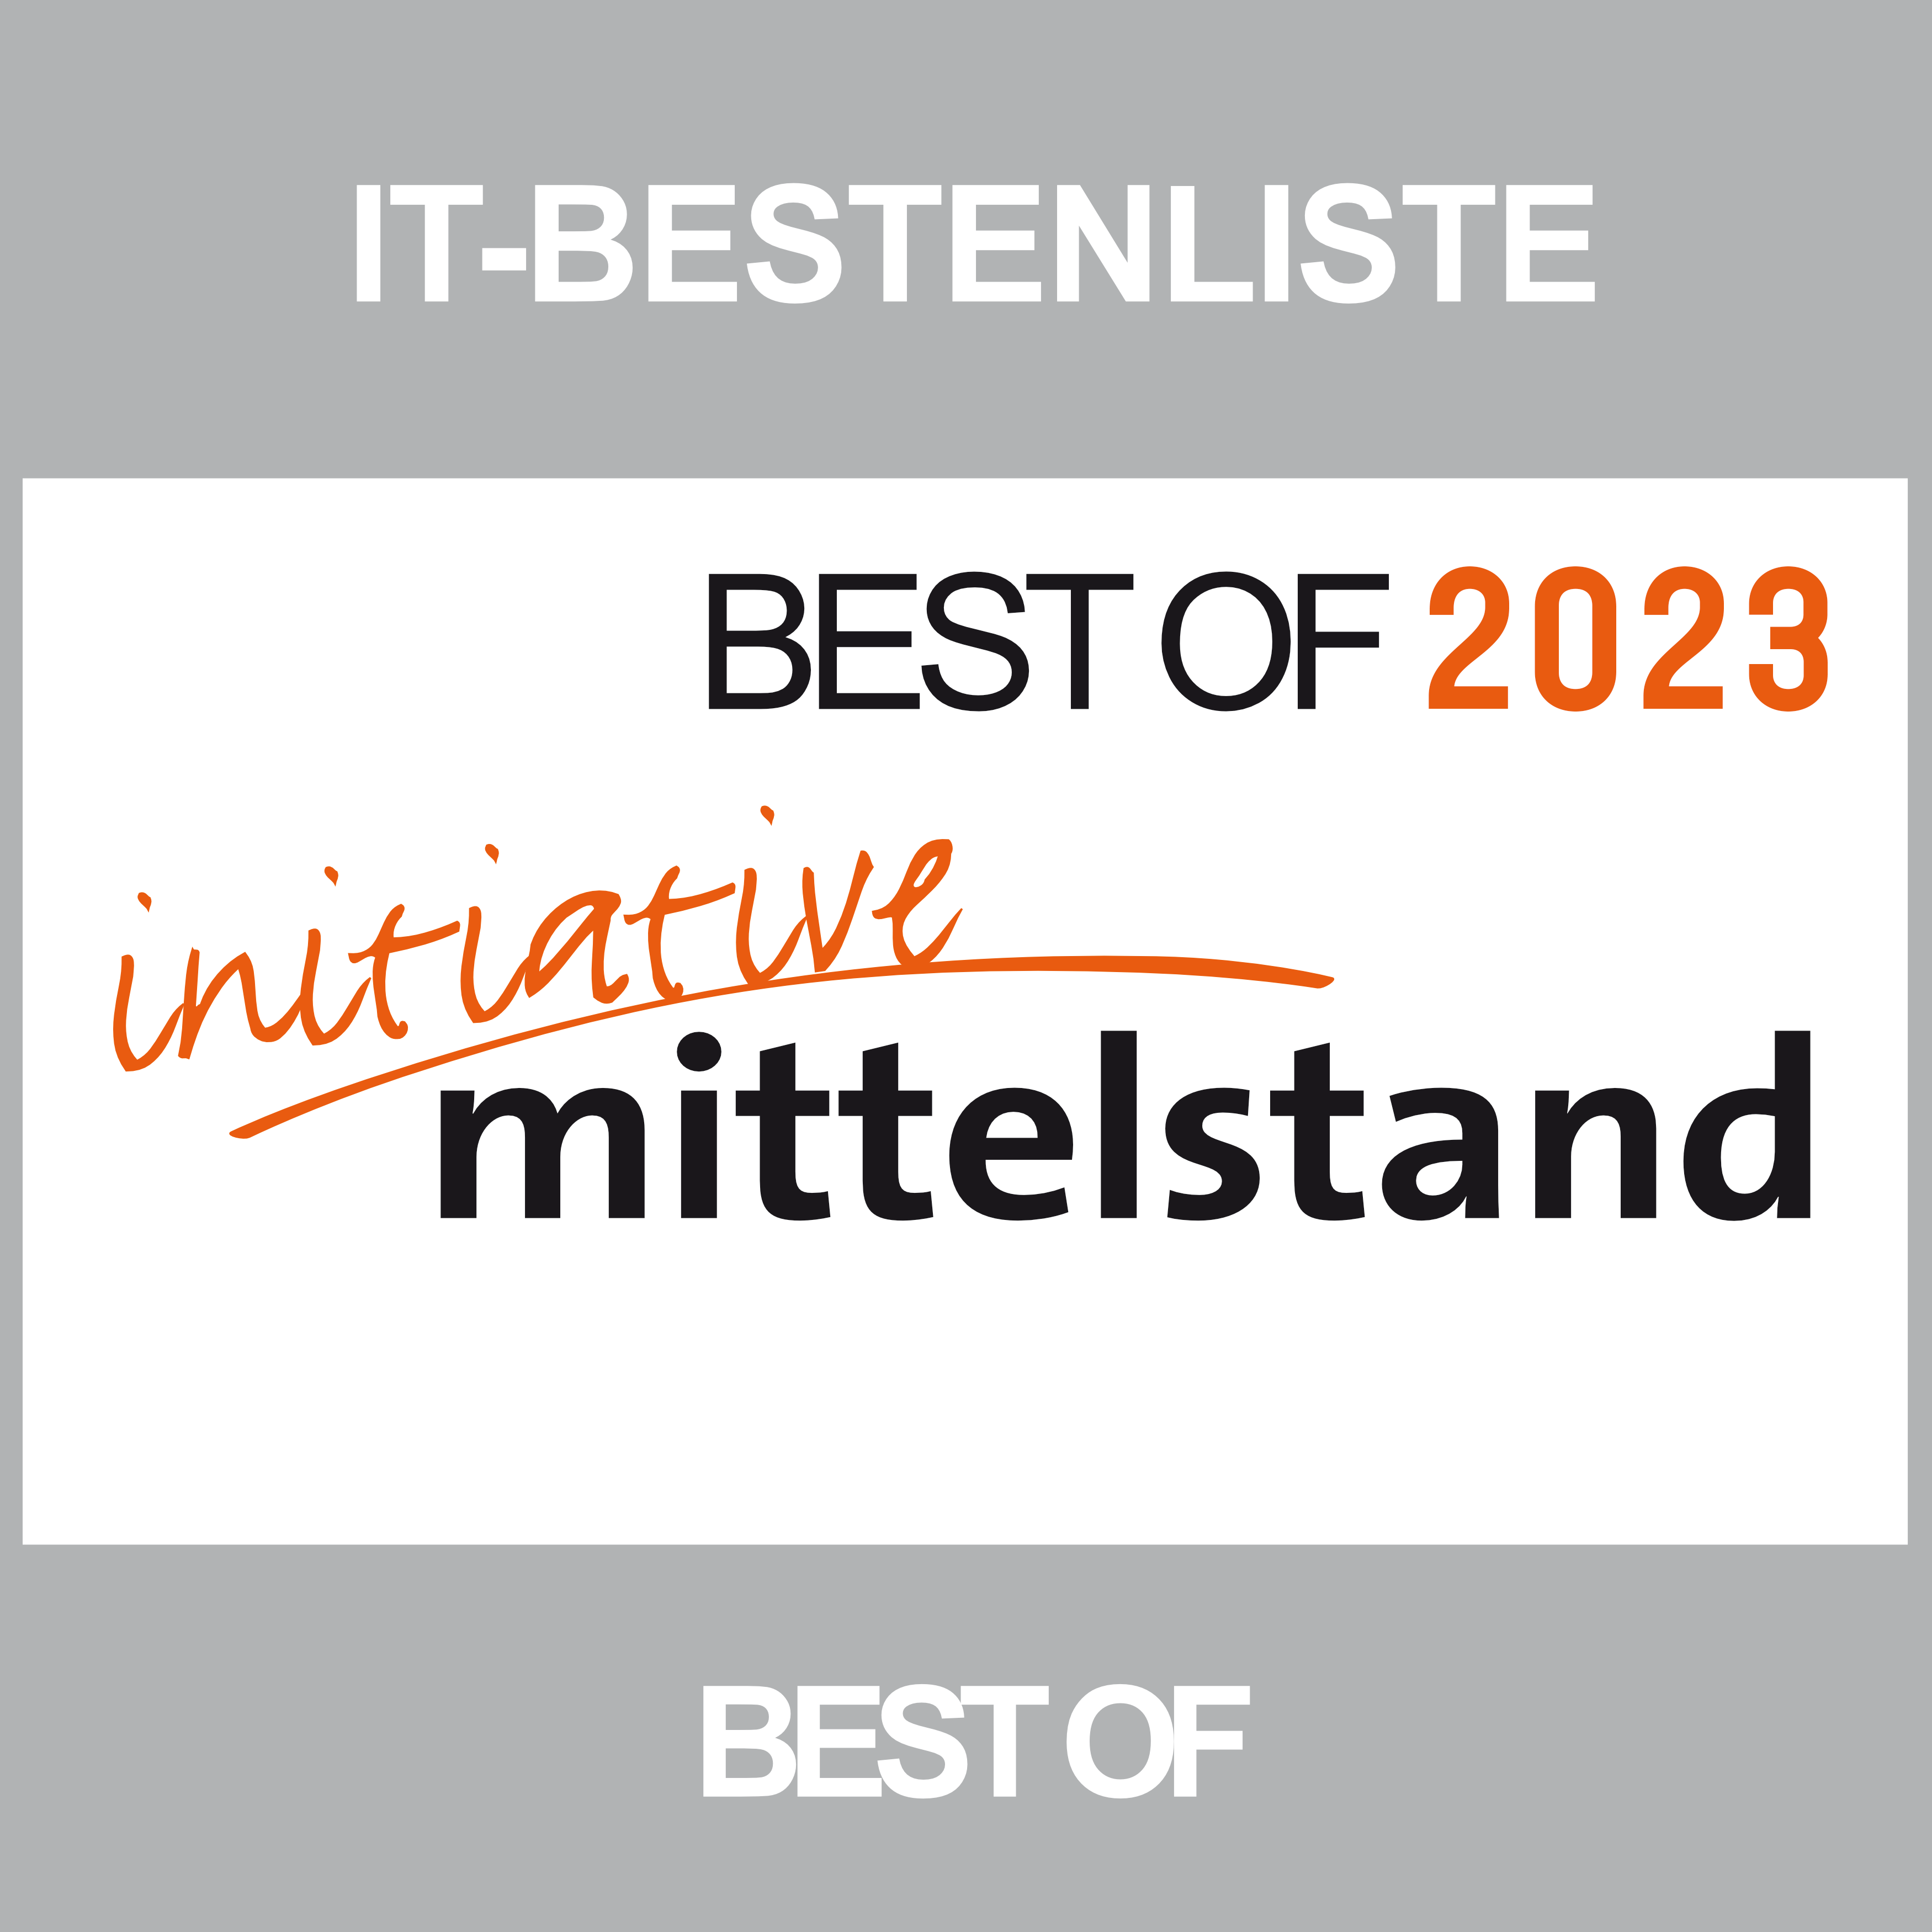 IT-Bestenliste Best of 2023